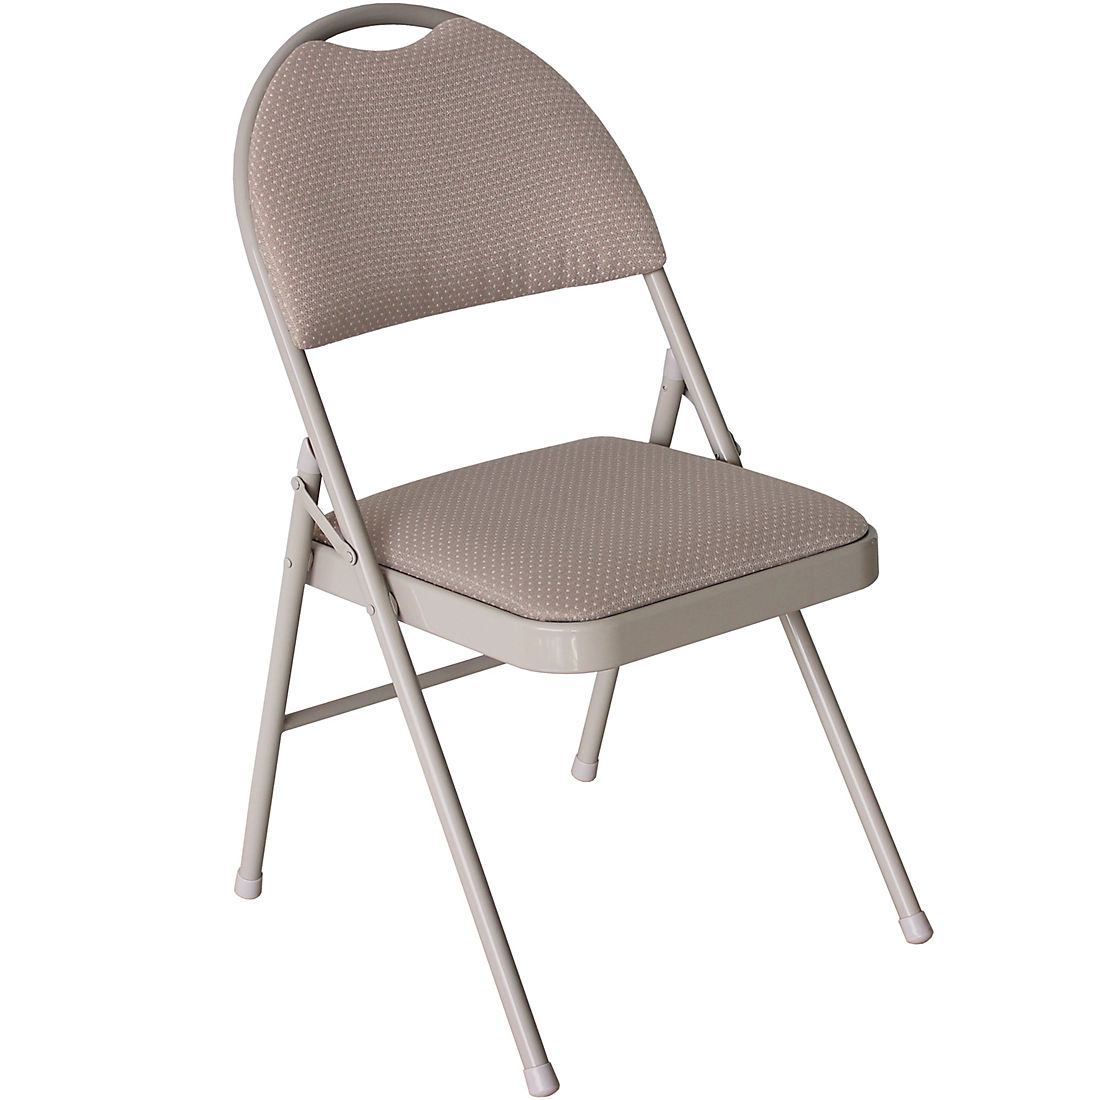 Folding Chairs Berkley Jensen Folding Chair - Gray - BJs WholeSale Club